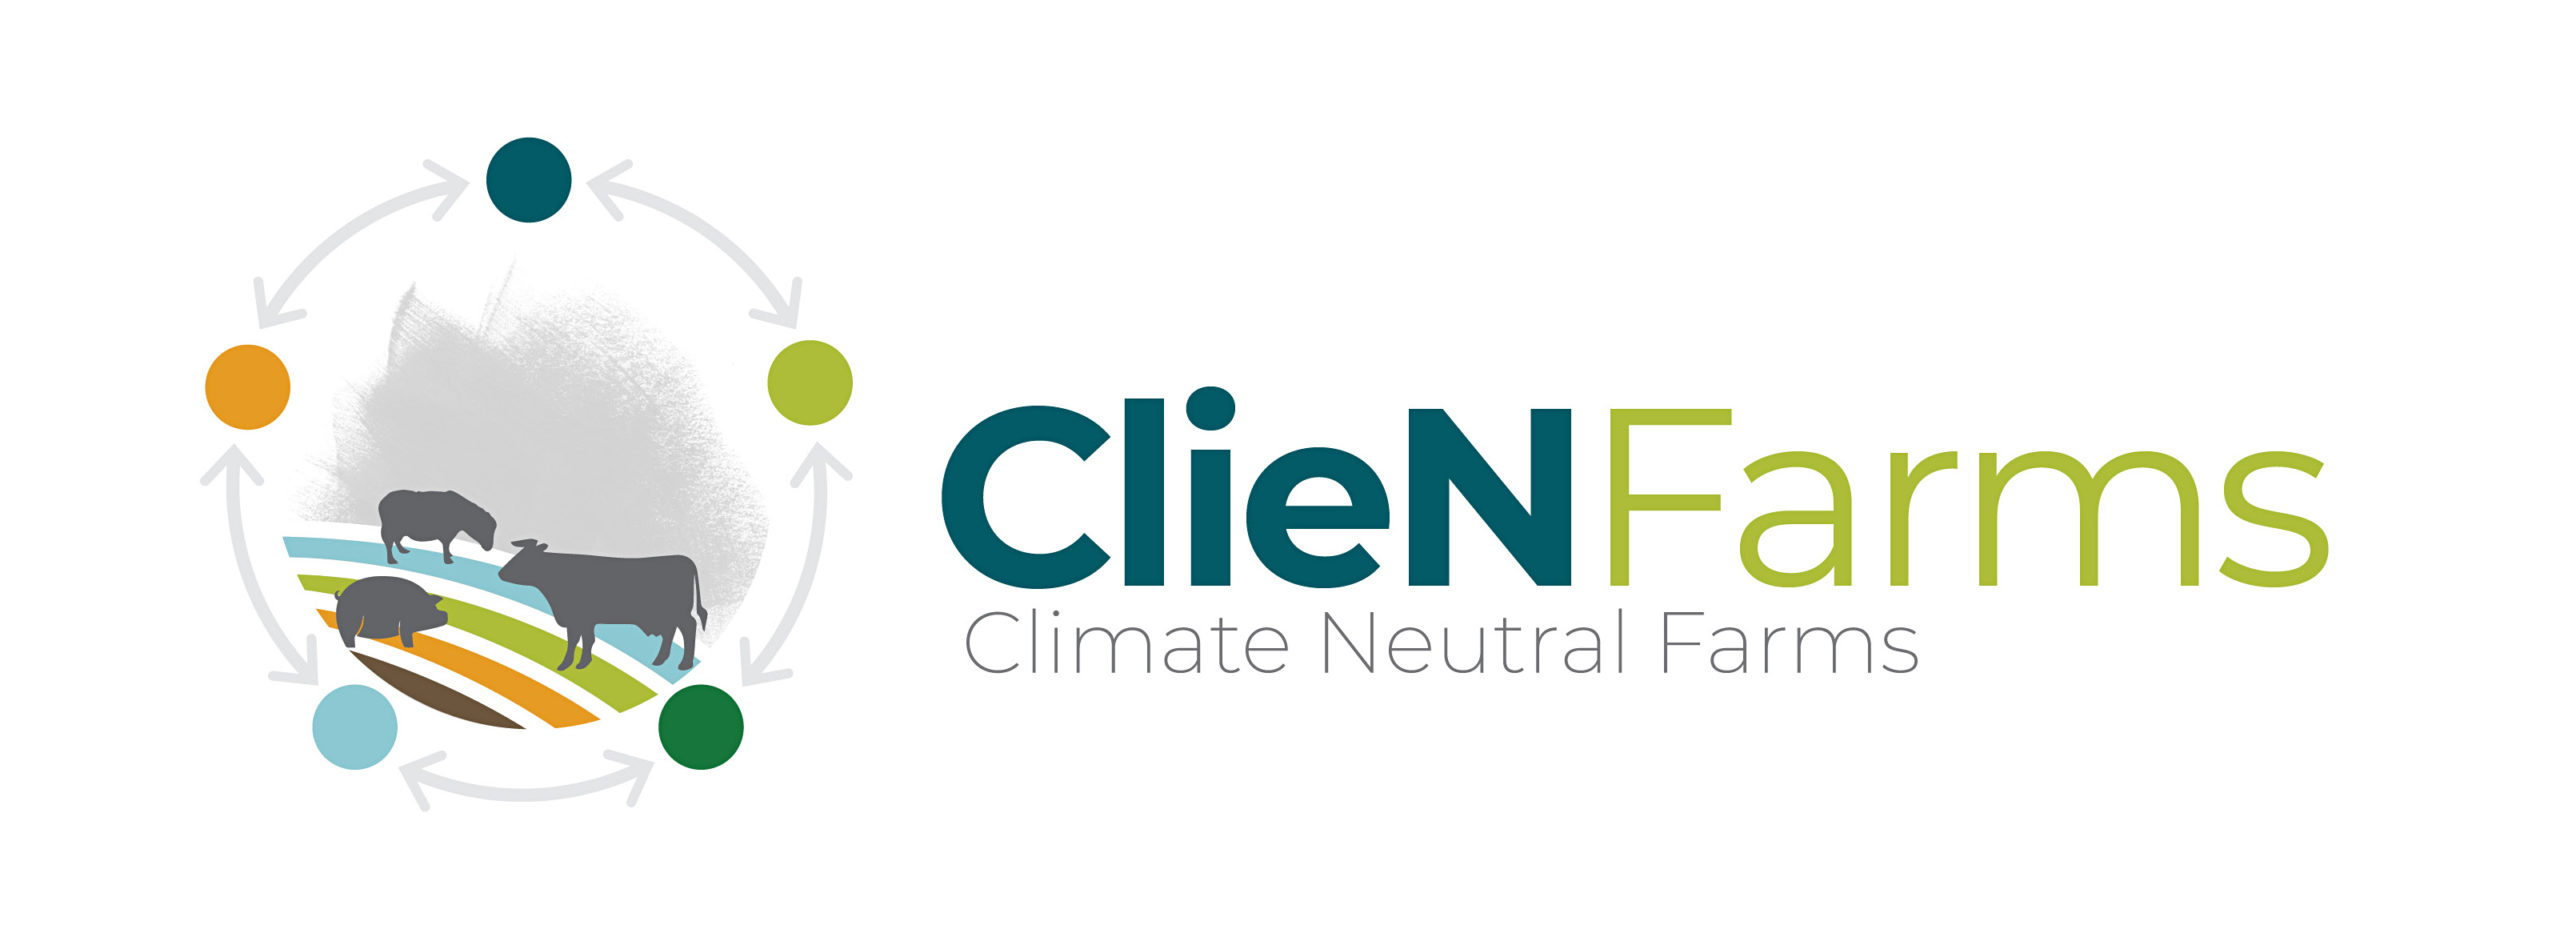 clienfarms logo